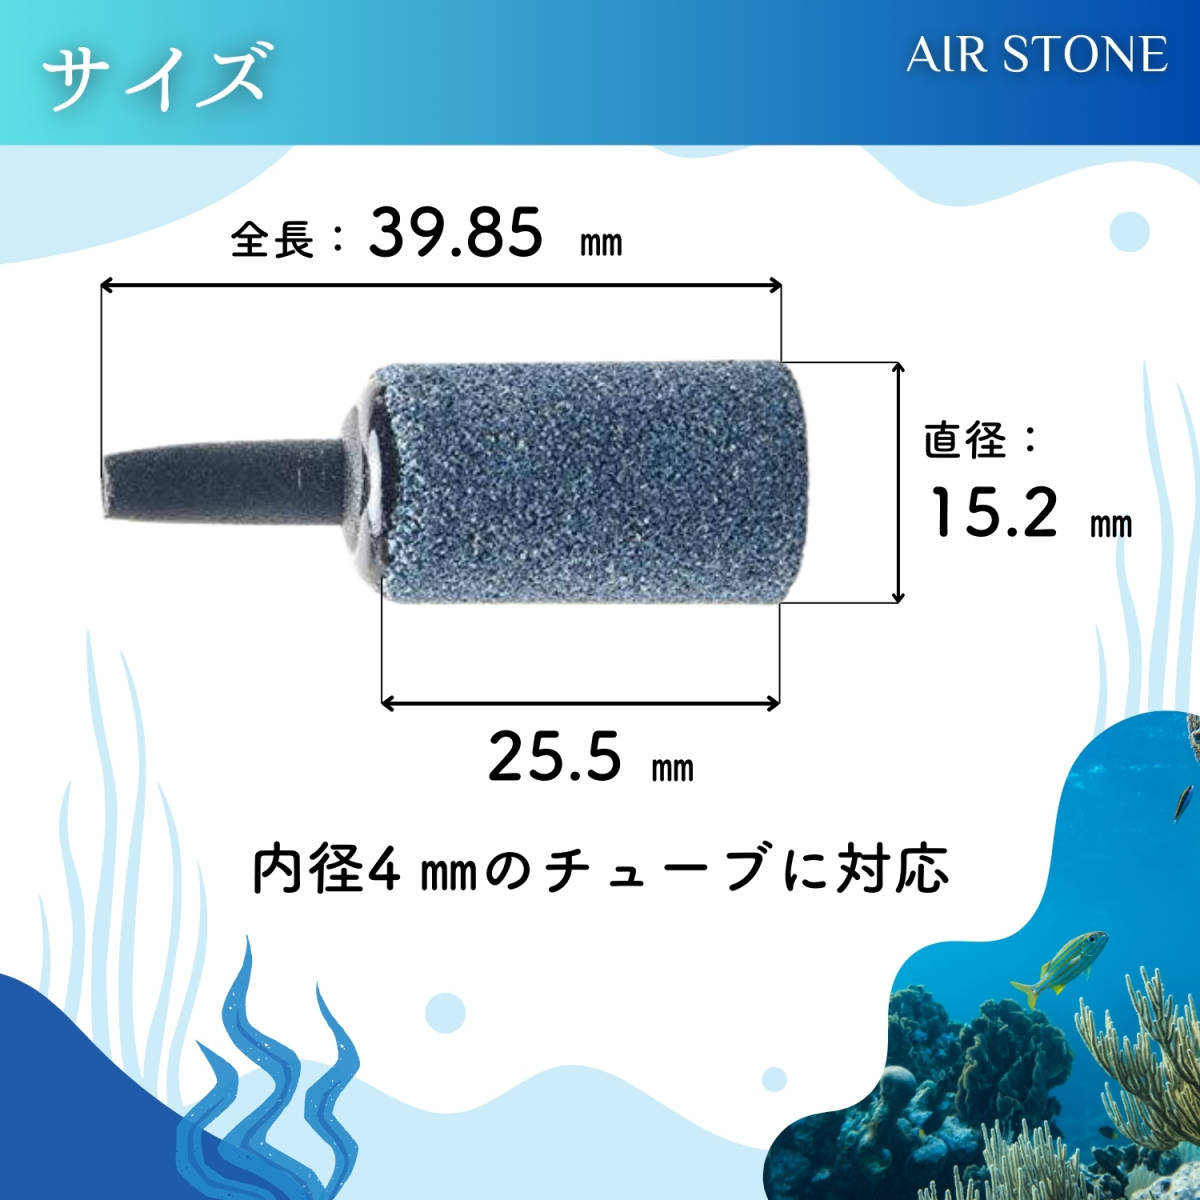  air Stone jpy tube shape air small foam bubble stone air aquarium oxygen small size bkbk breeding hydroponic culture tube 50 piece set 